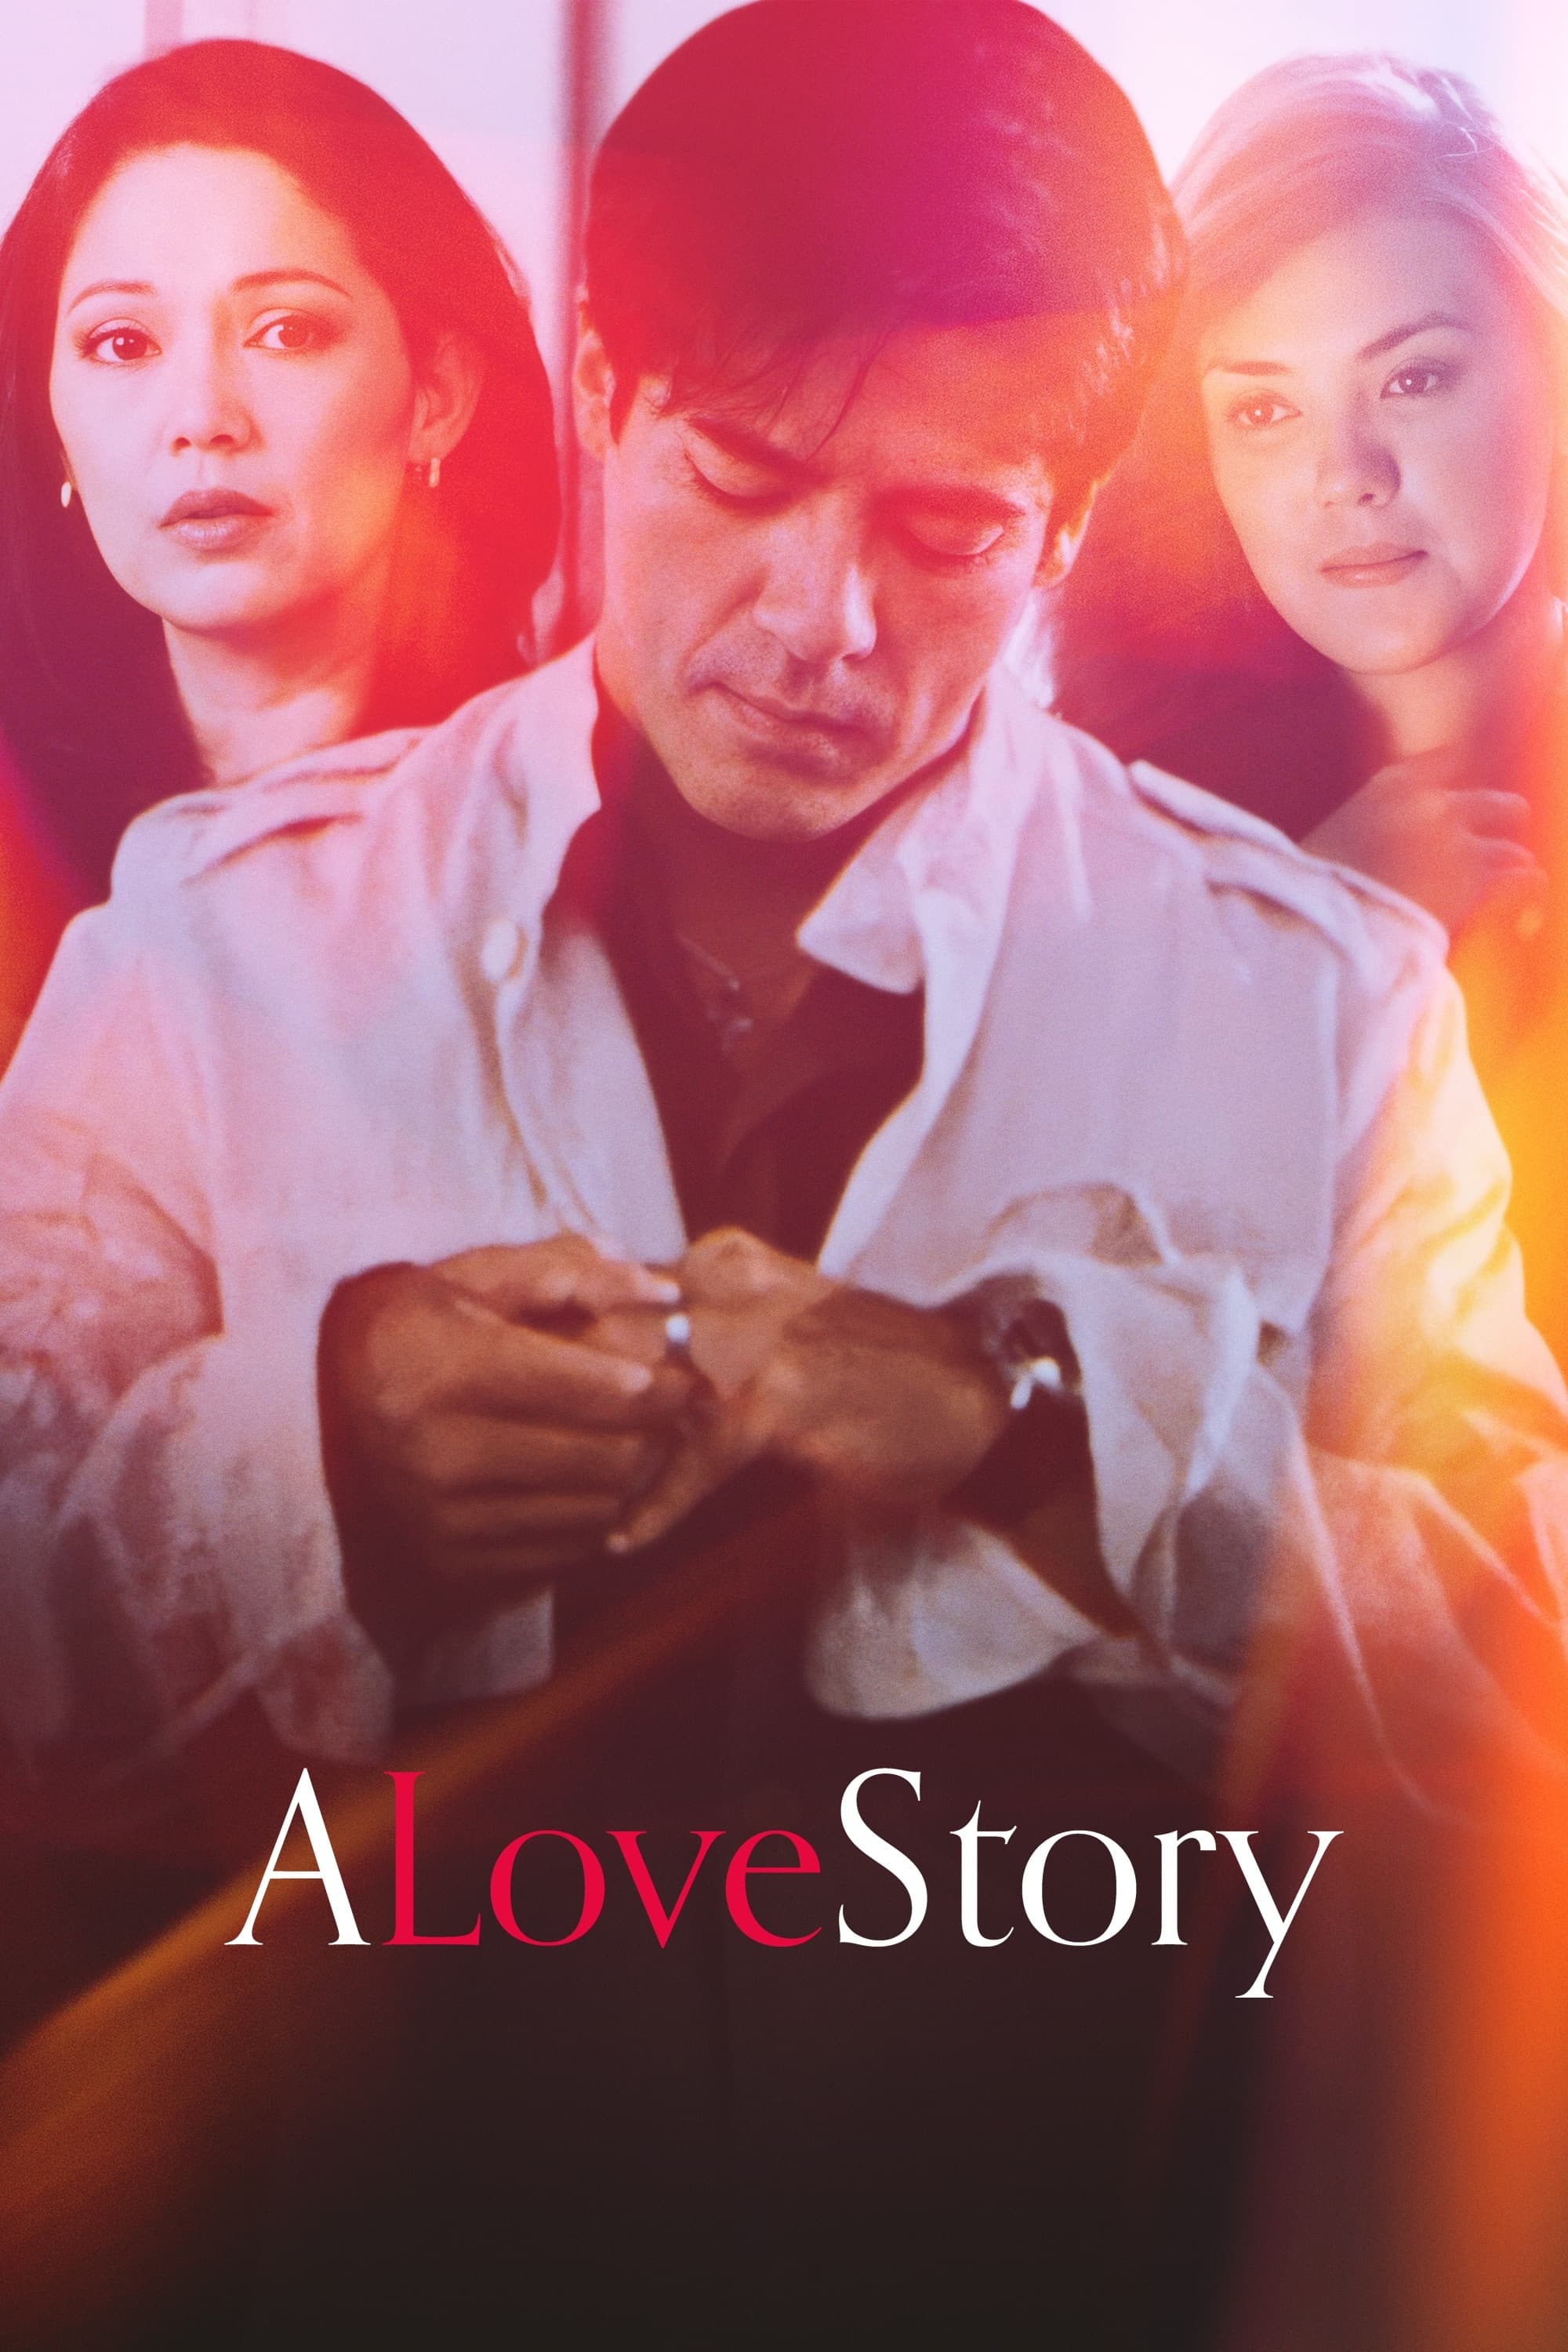 A Love Story film